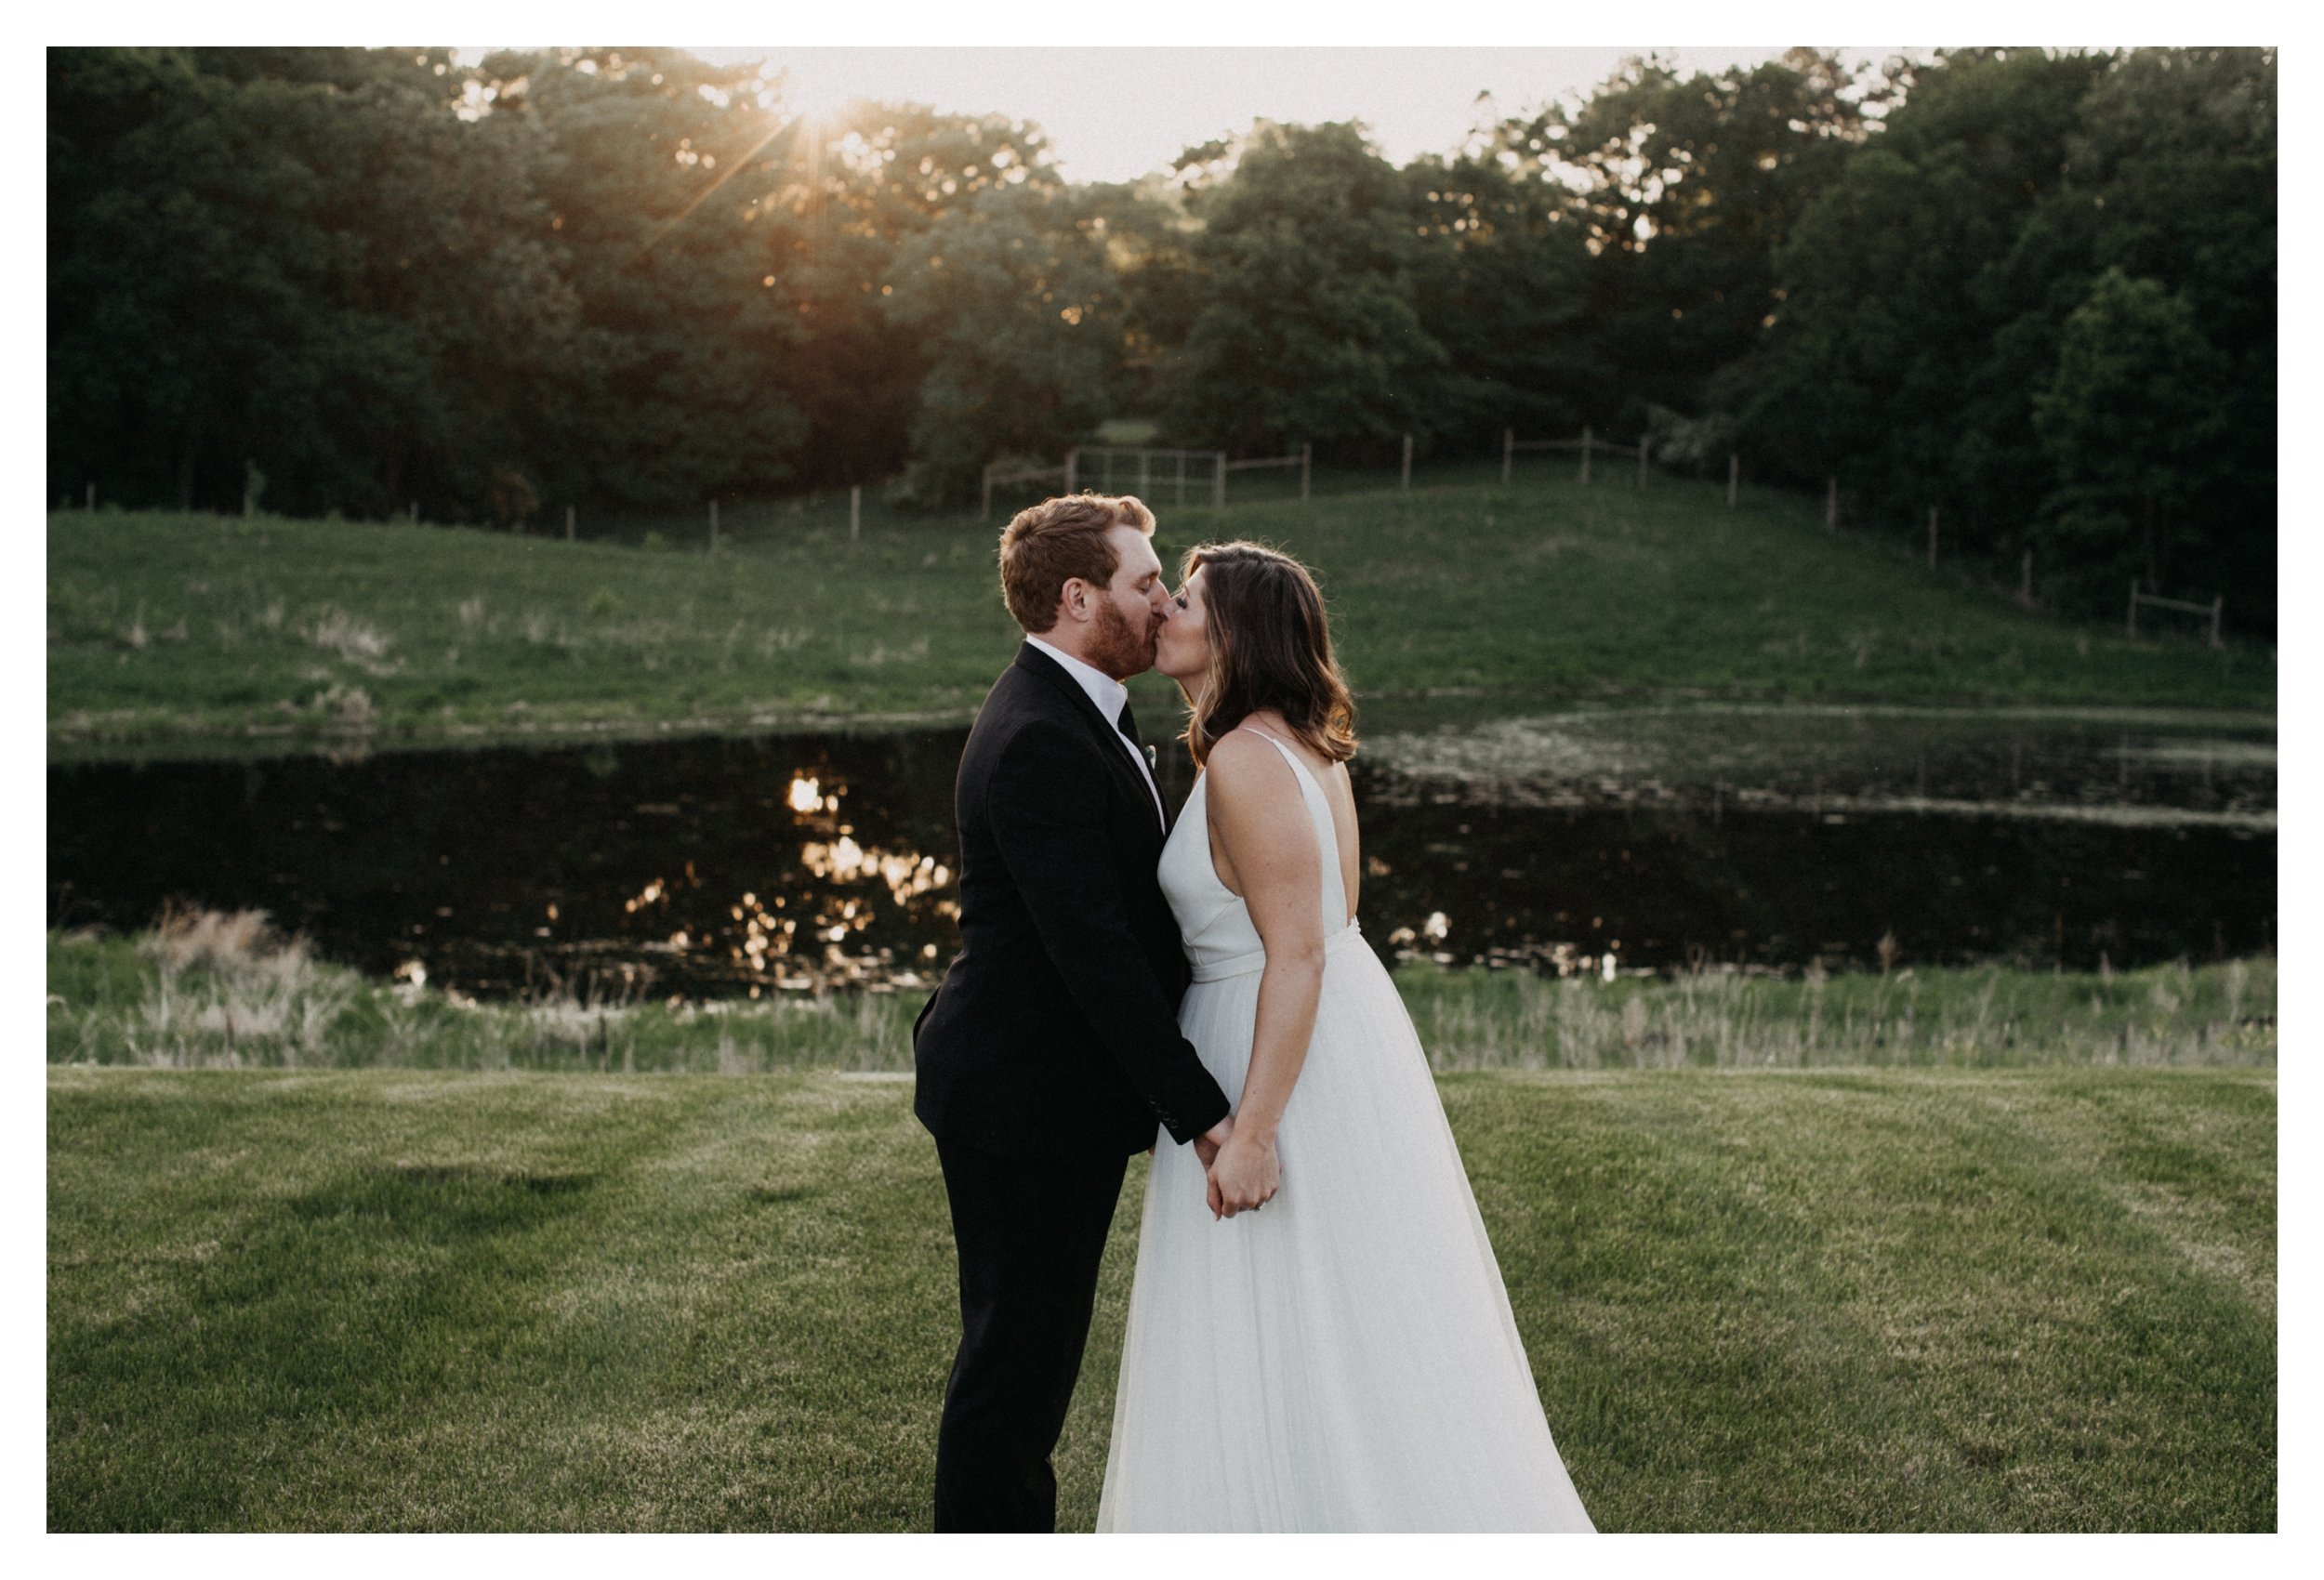 Bride and groom kissing during sunset at Minnesota vineyard wedding venue